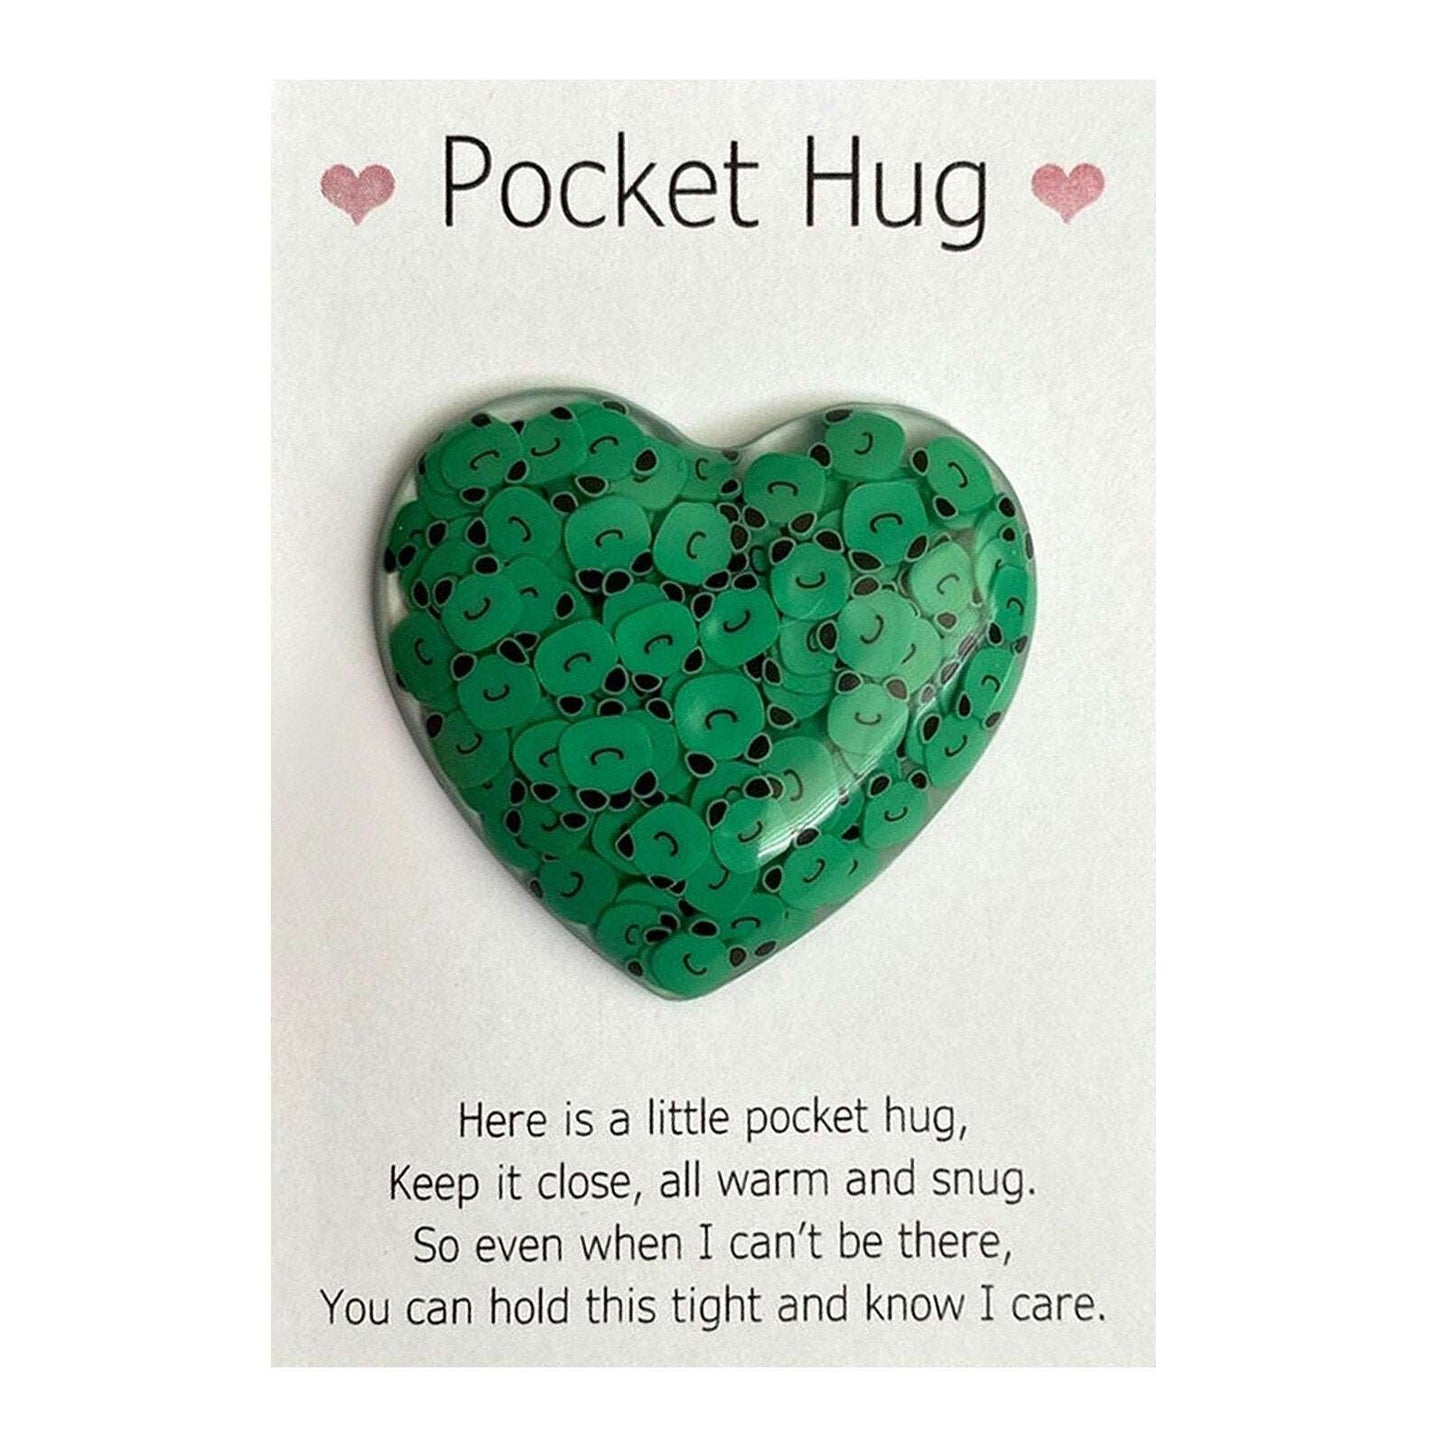 Pocket Hug Heart Love Token - Gift Sets from Dear Cece - Just £6.99! Shop now at Dear Cece